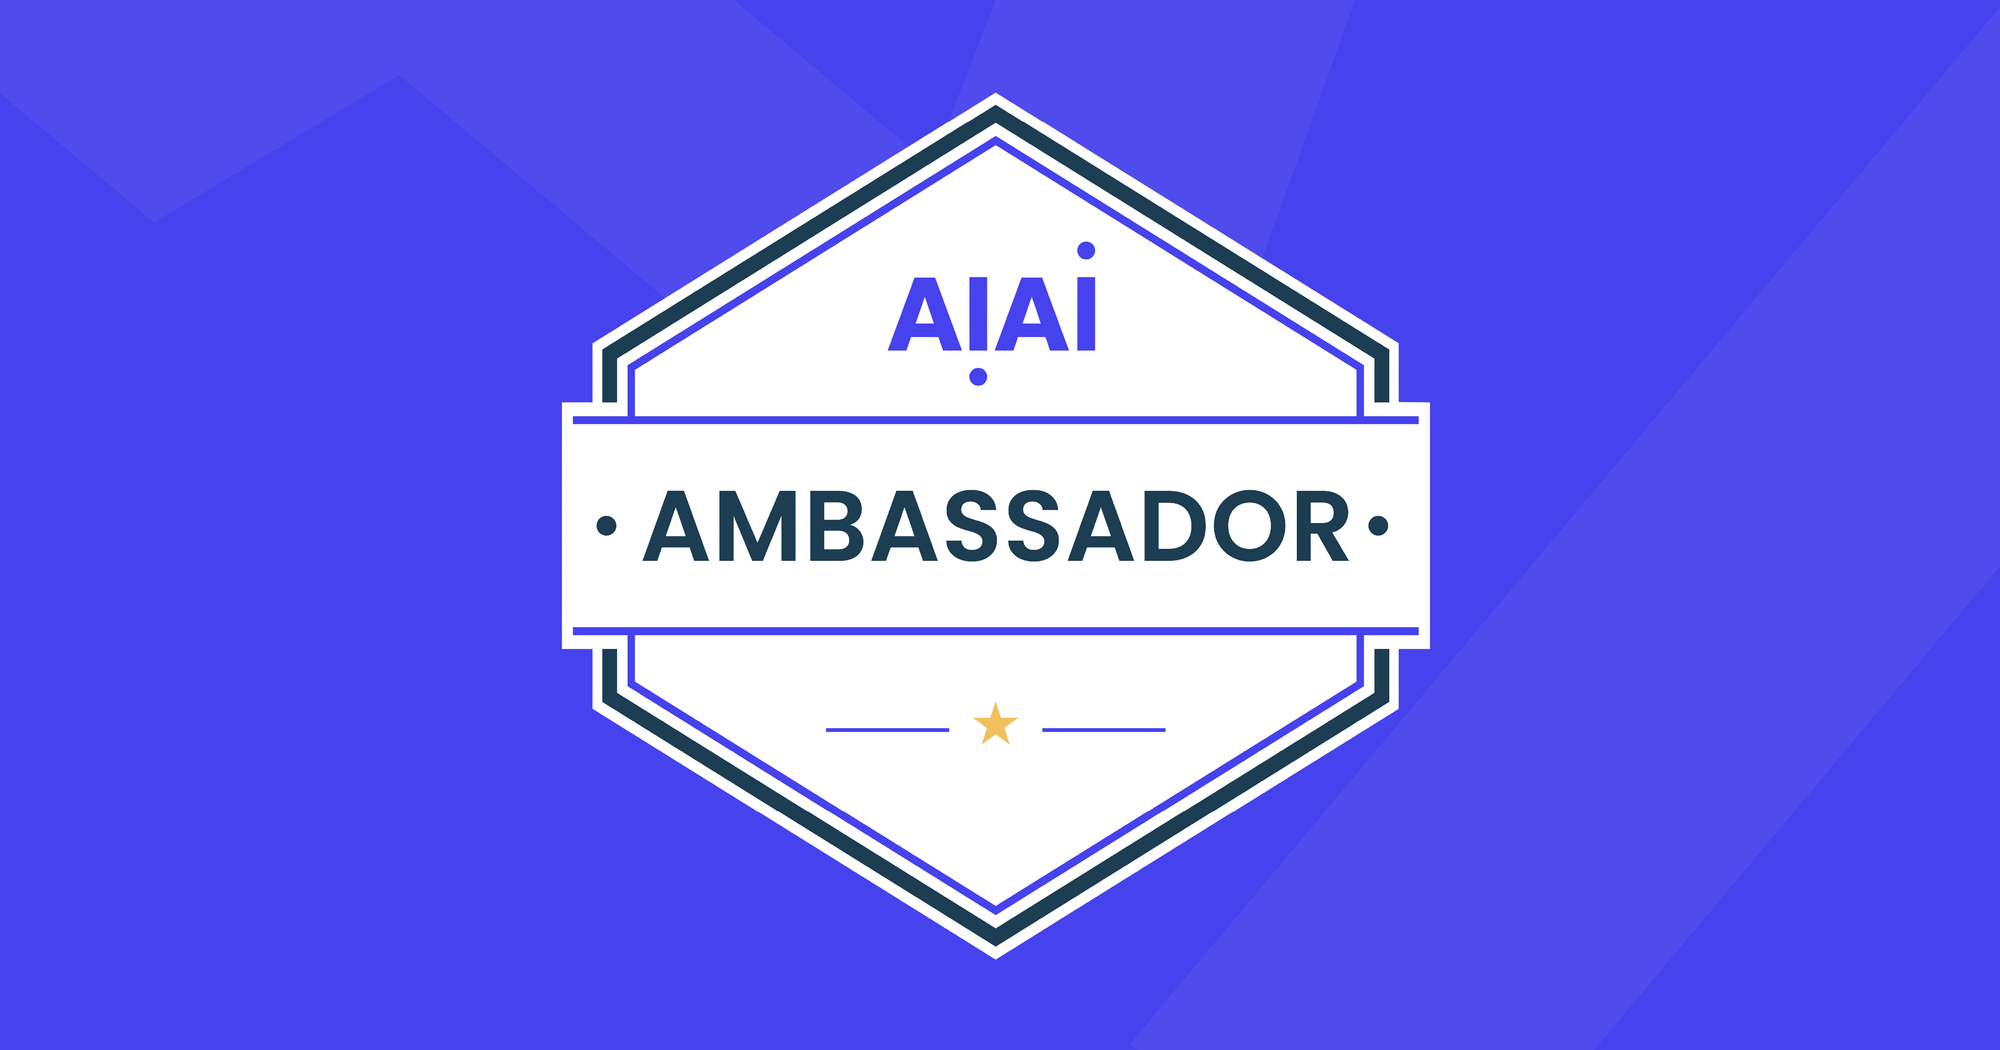 image of the program AIAI Ambassador